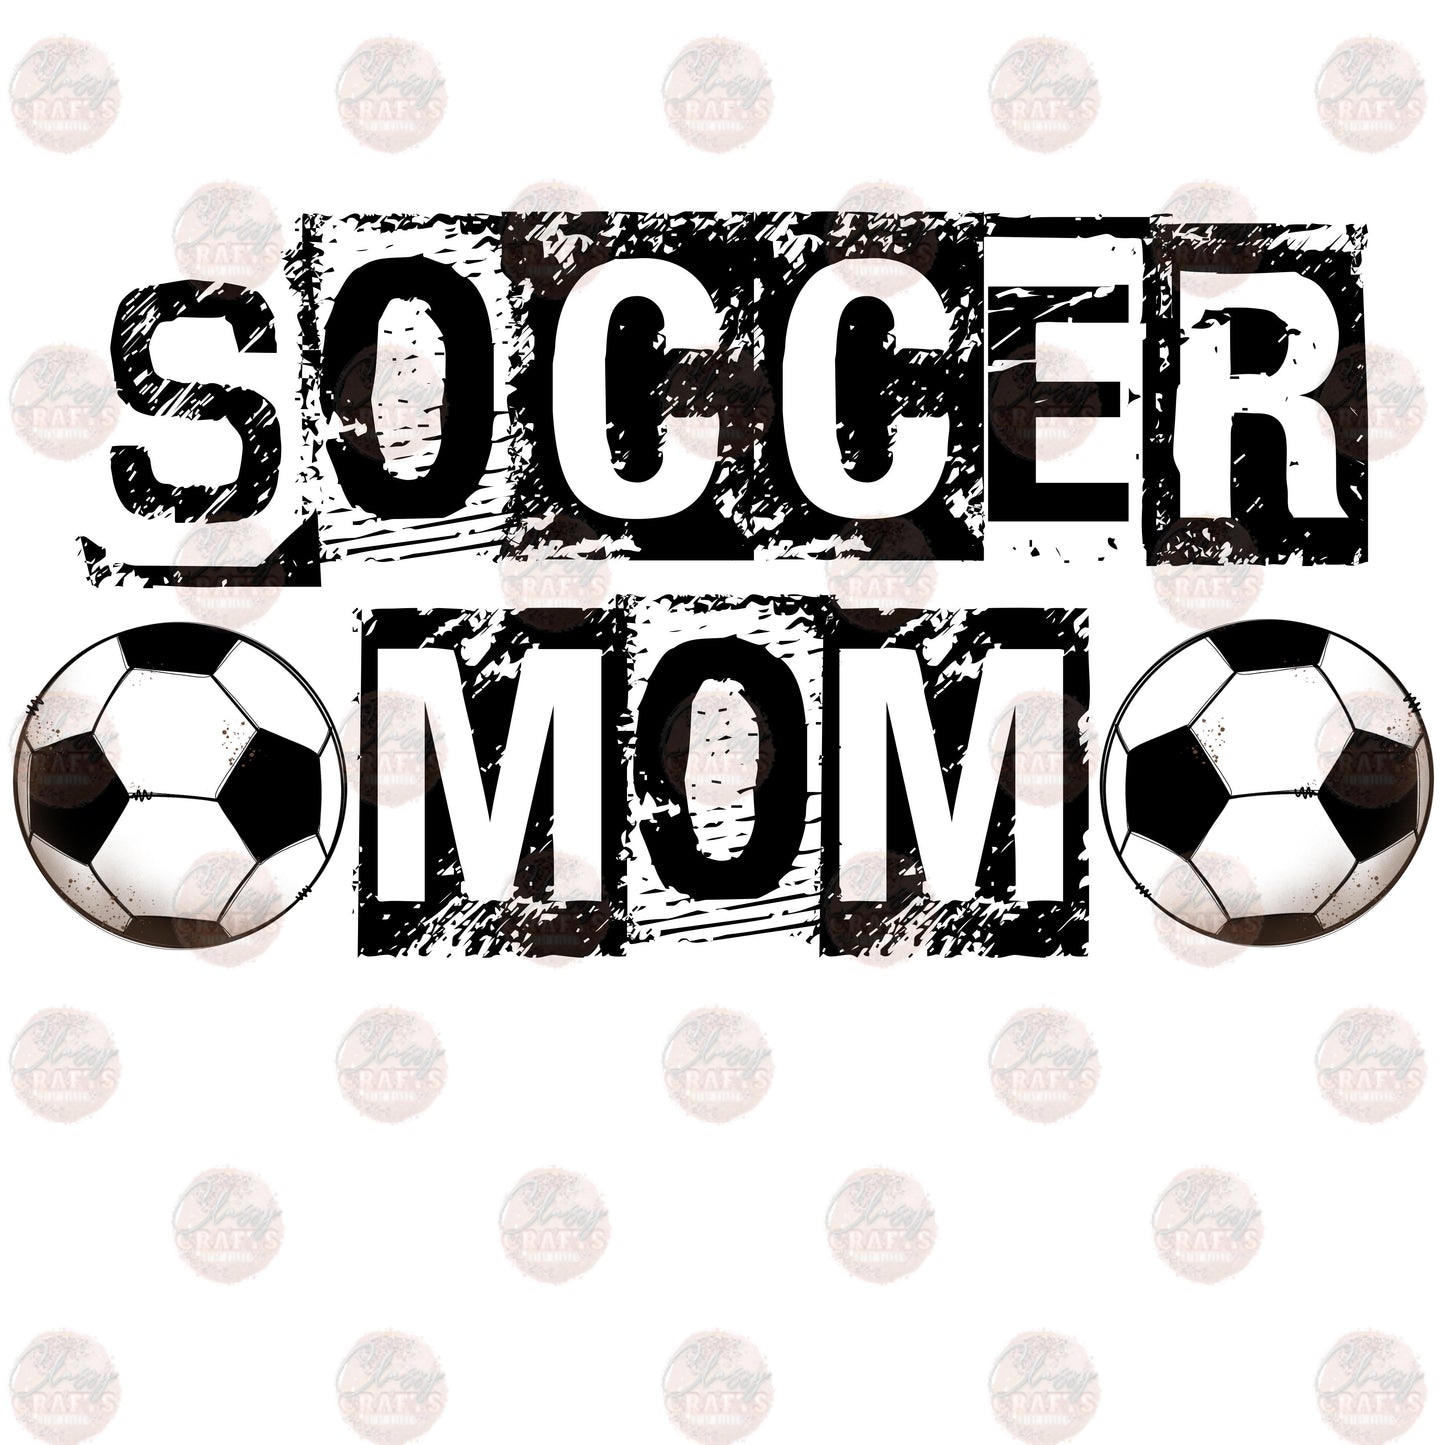 Soccer Mom 1 Transfer